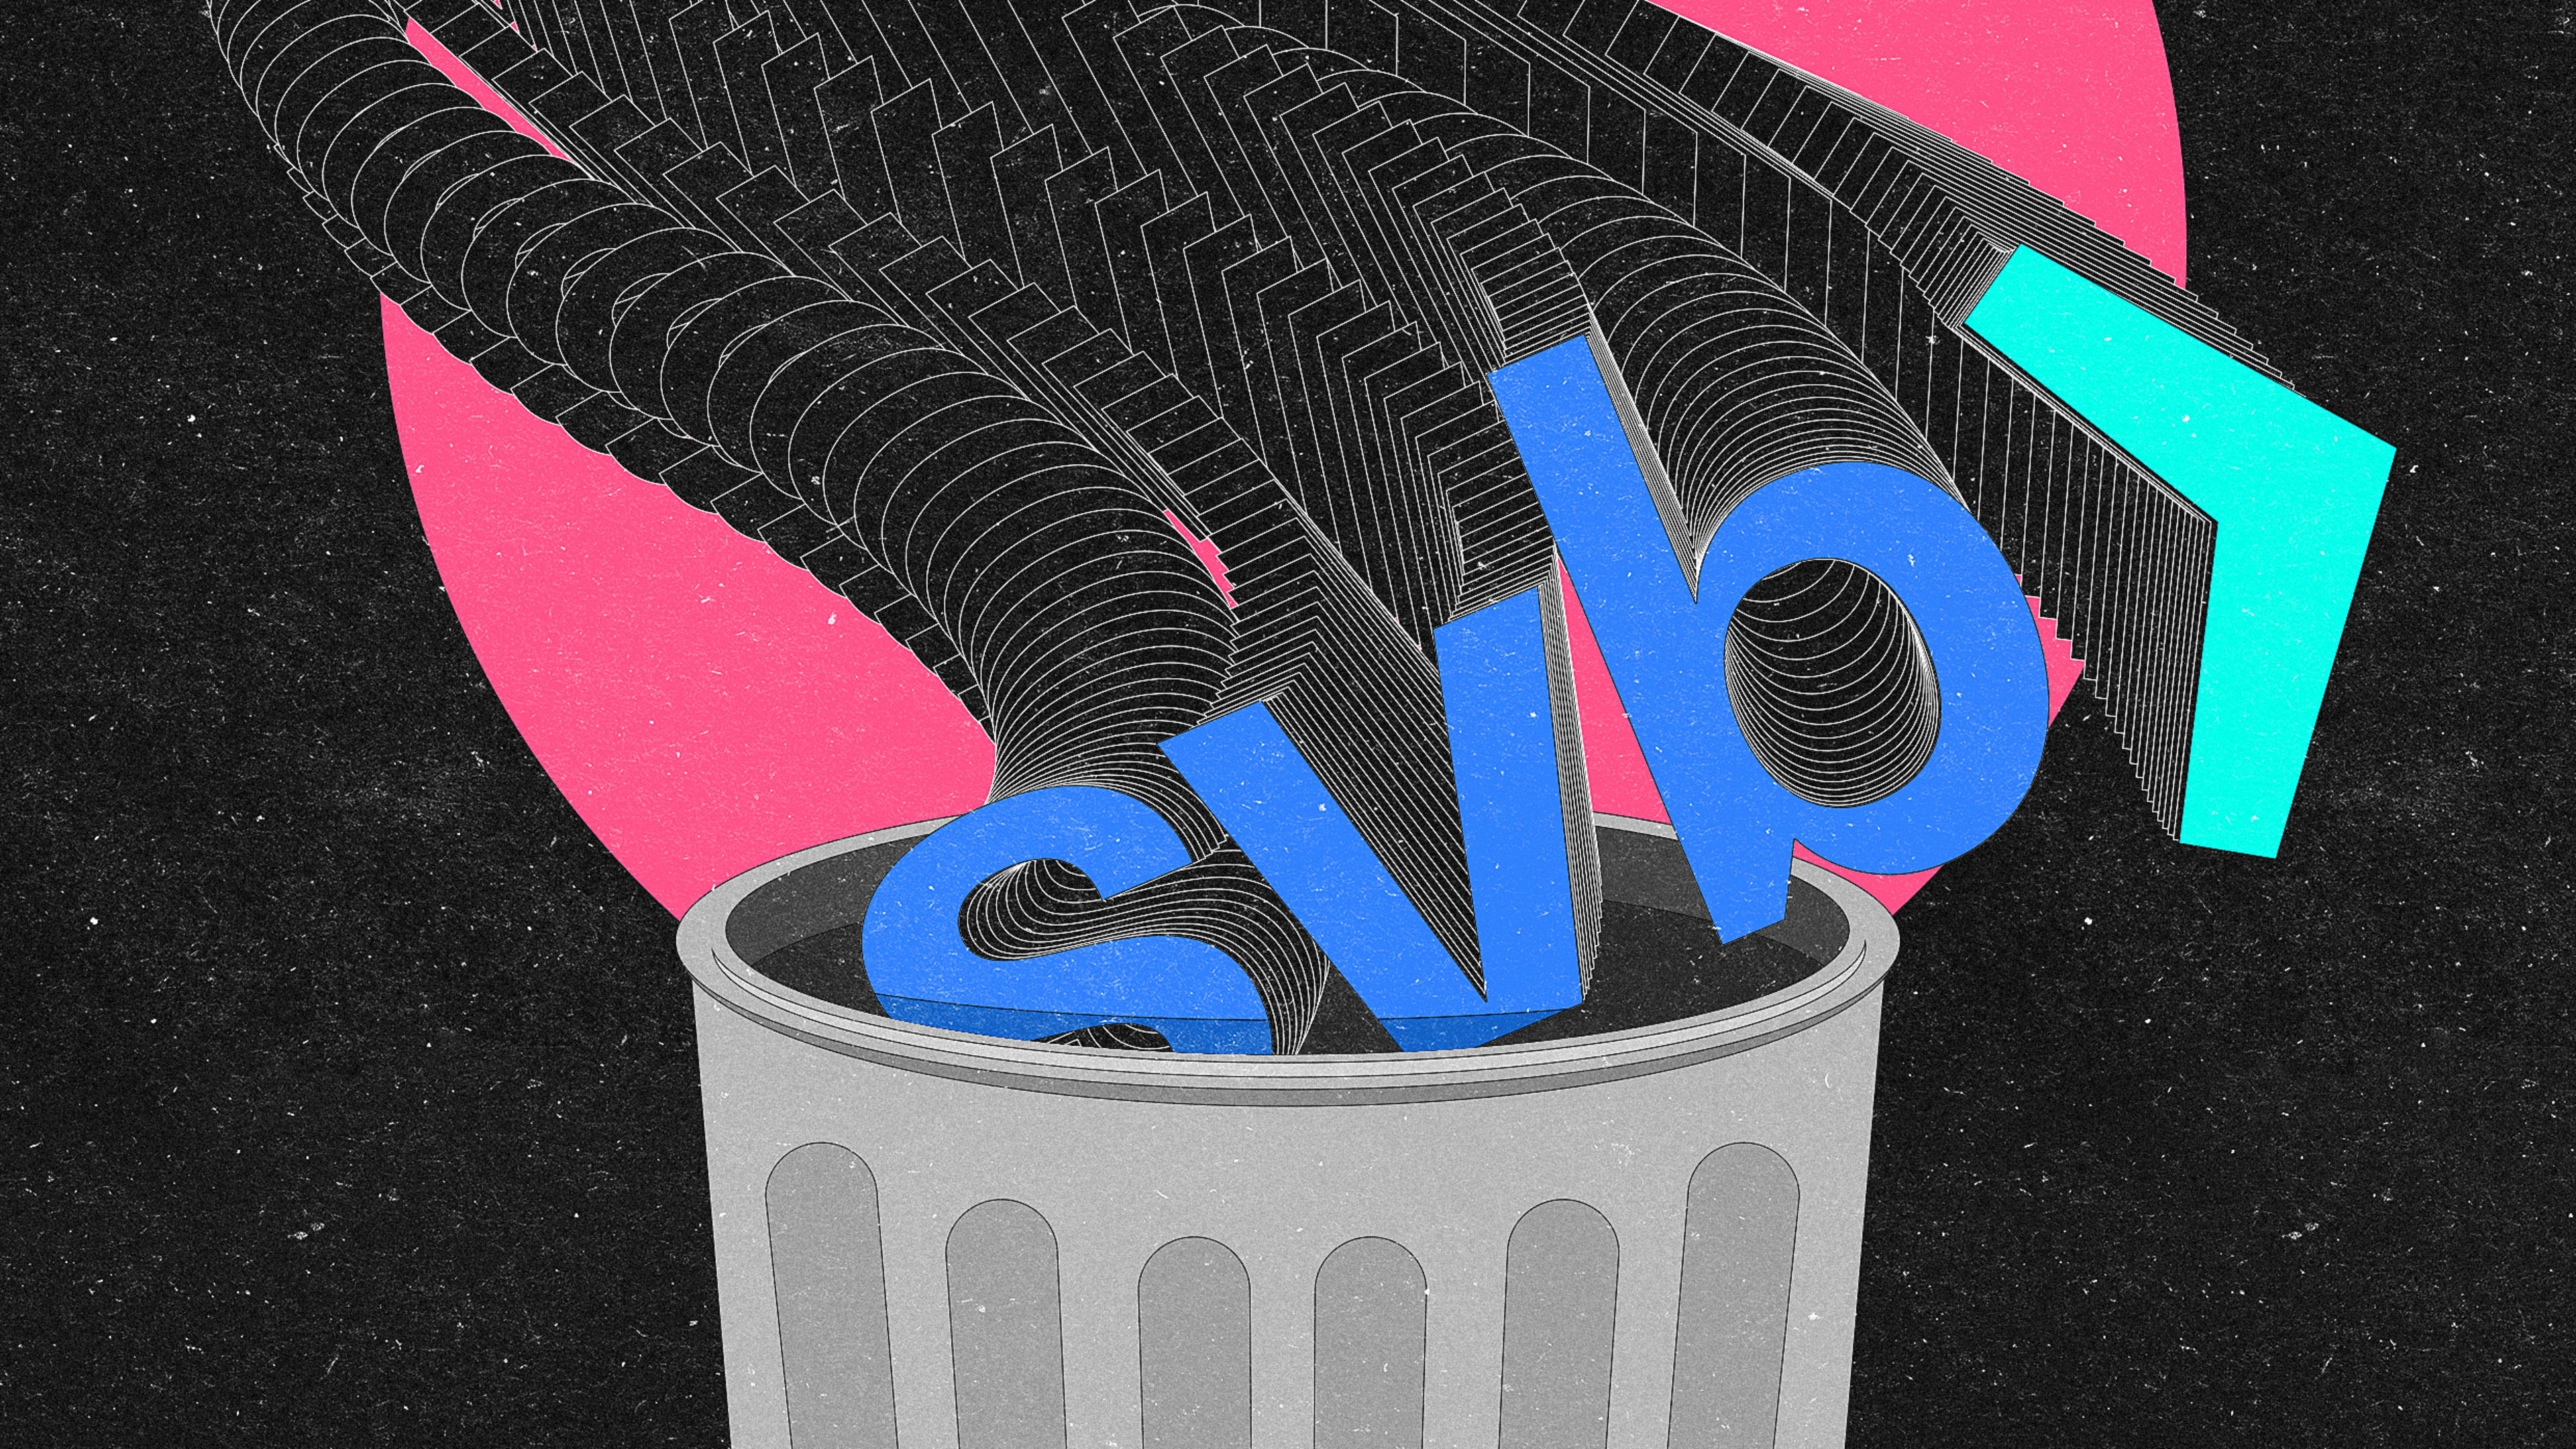 SVB built its brand on community. Then the community dumped it like a ton of bricks